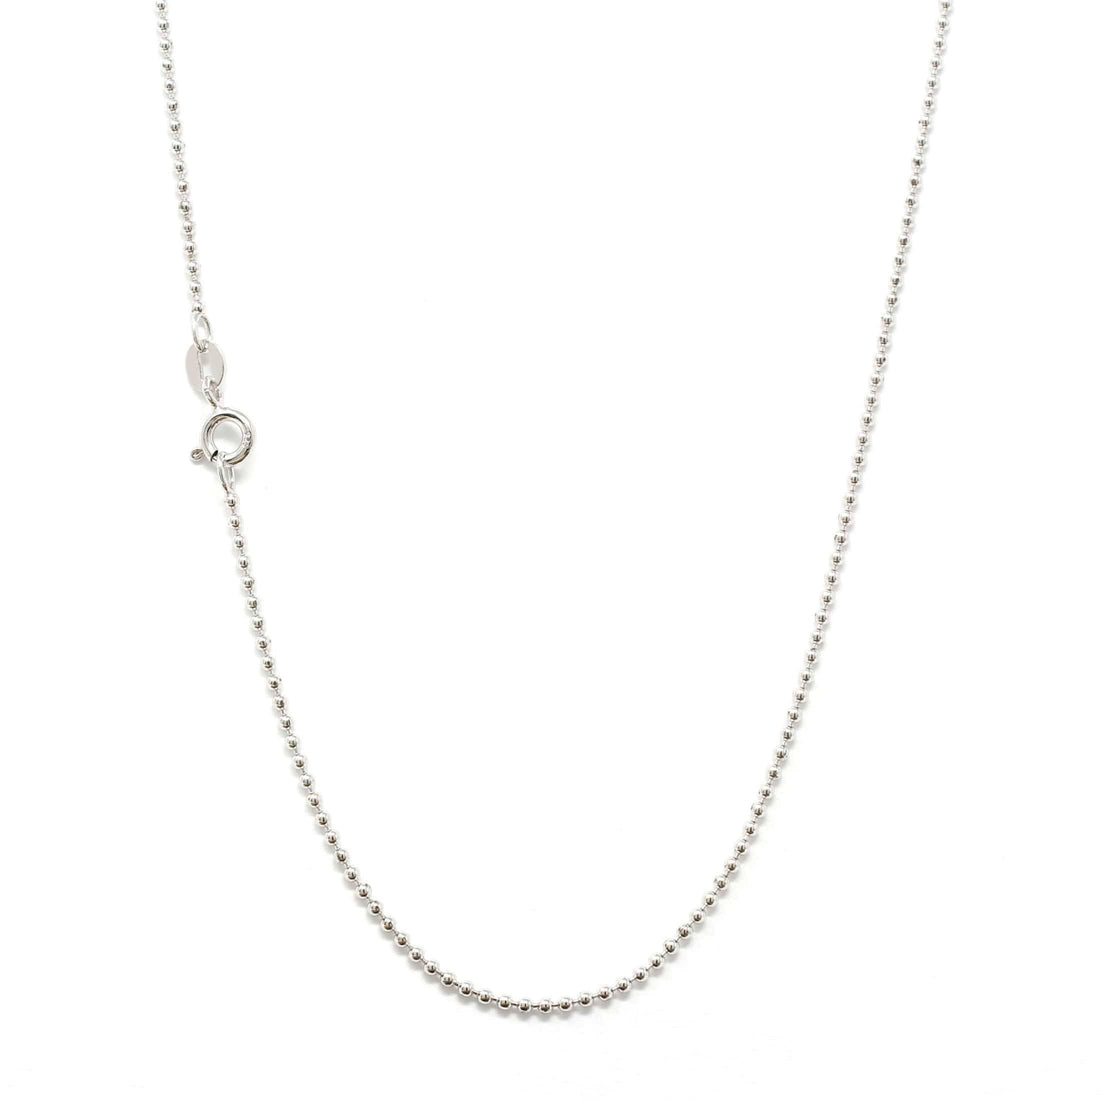 Baikalla Jewelry silver chain Italian Sterling Silver Bead Chain 18 inch